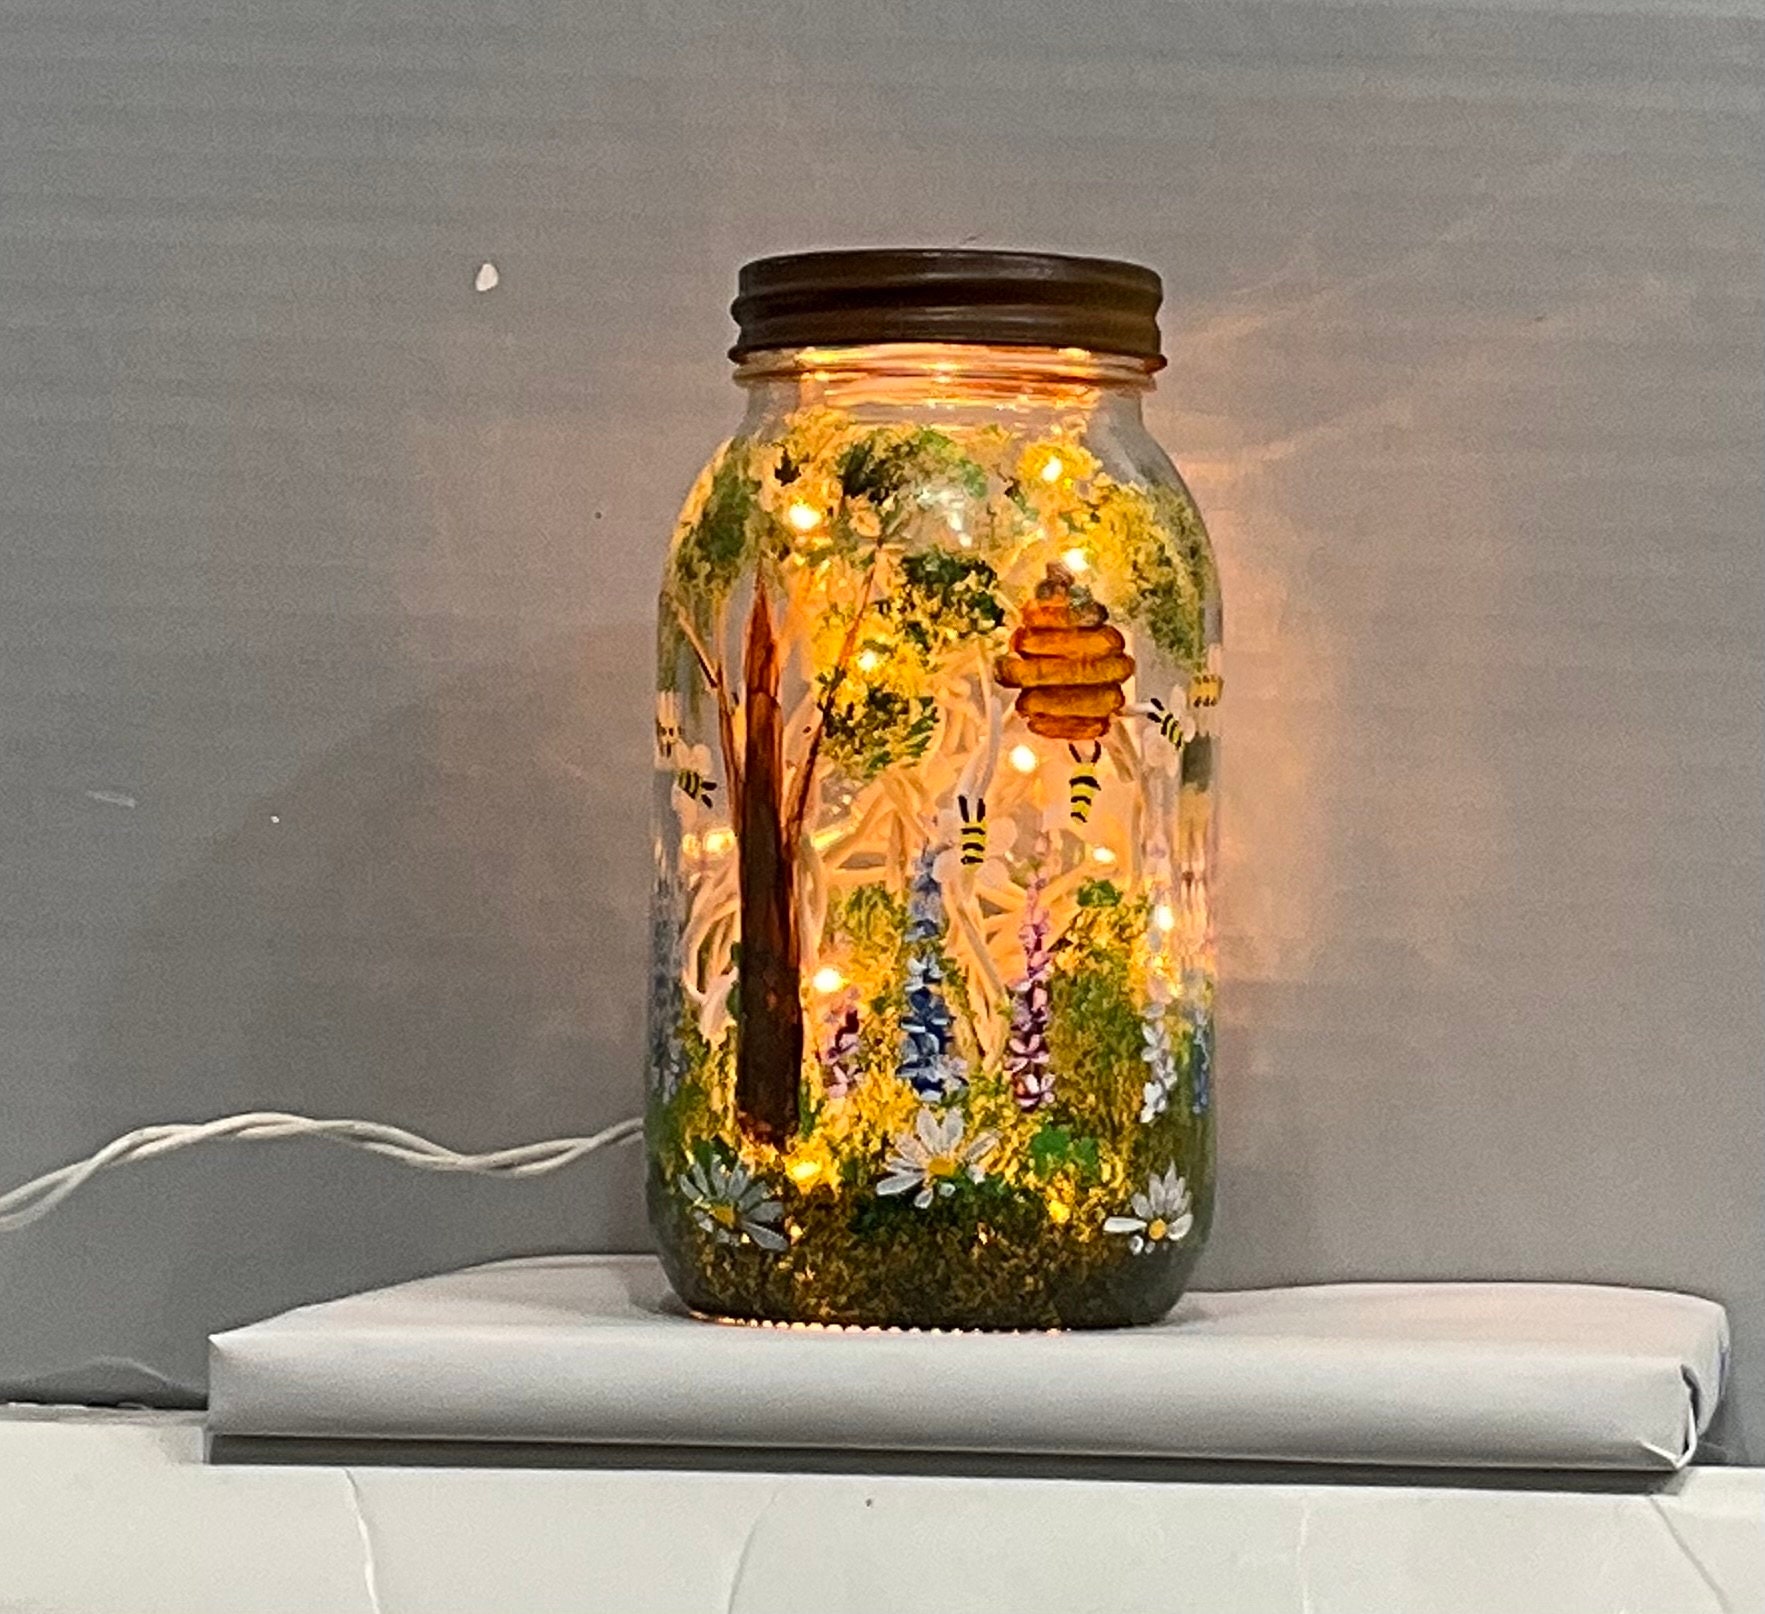  EVOLUX Fairy Lights Dried Flowers Decorative Jar